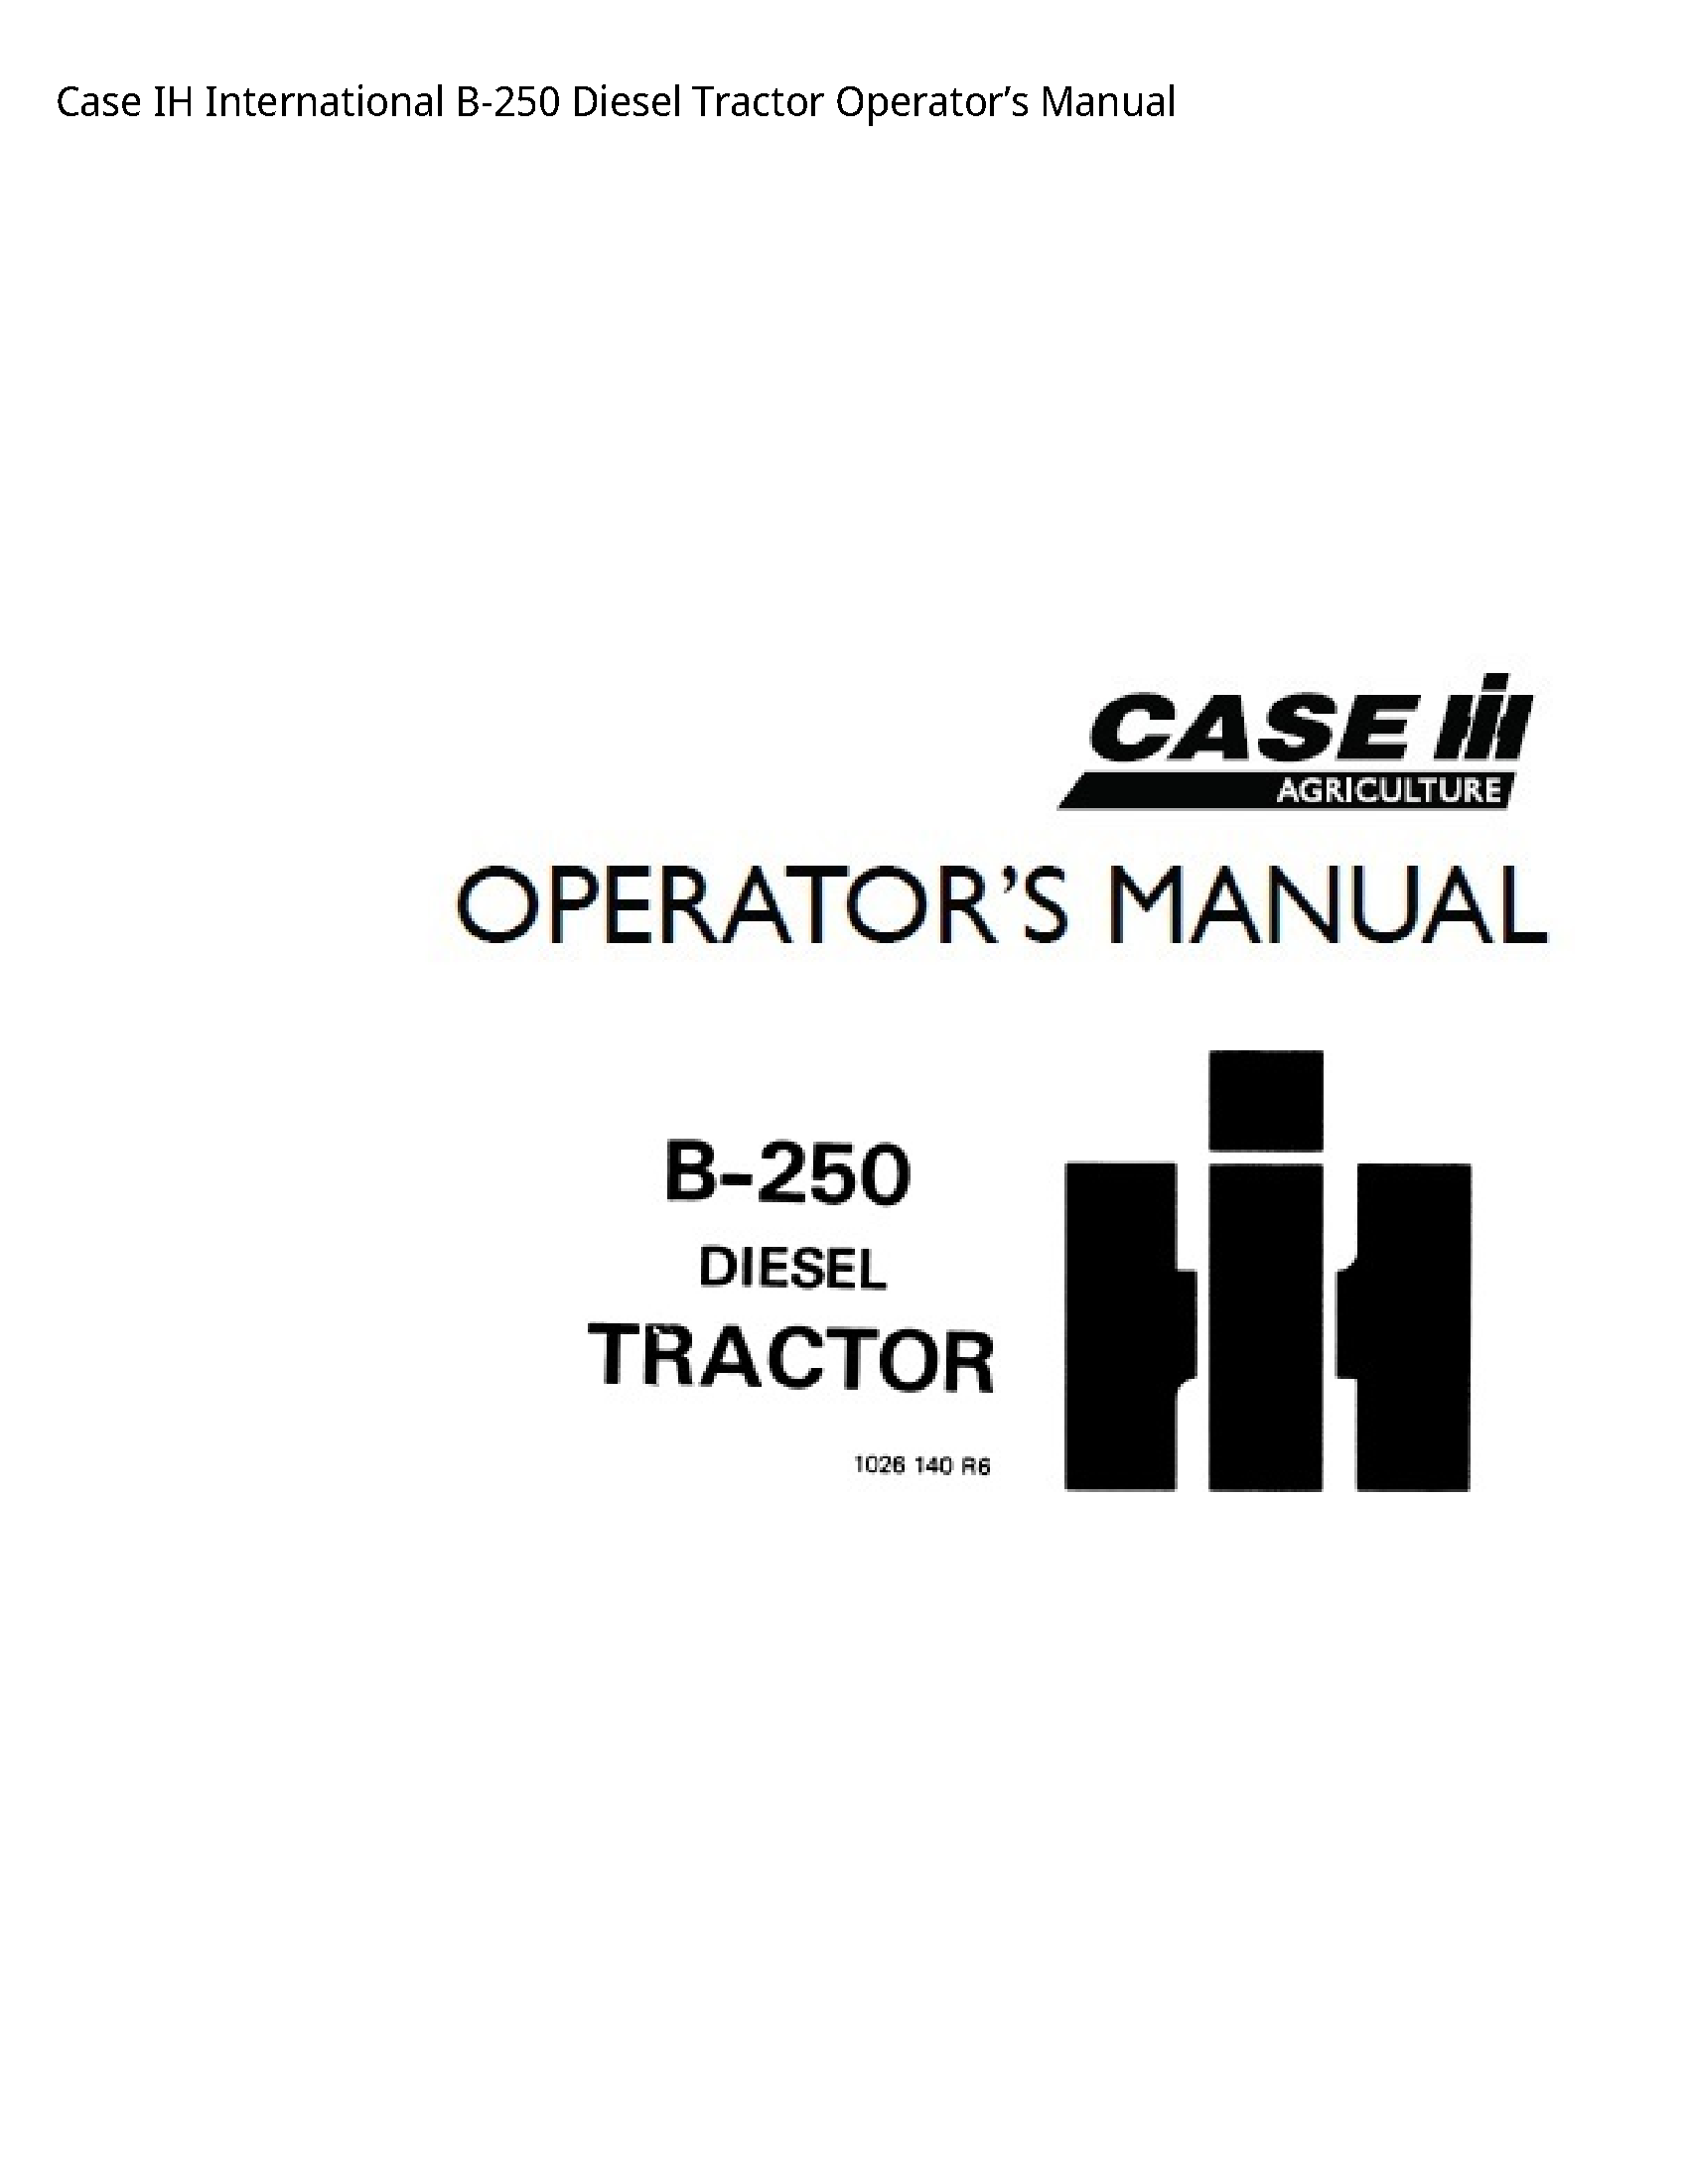 Case/Case IH B-250 IH International Diesel Tractor Operator’s manual